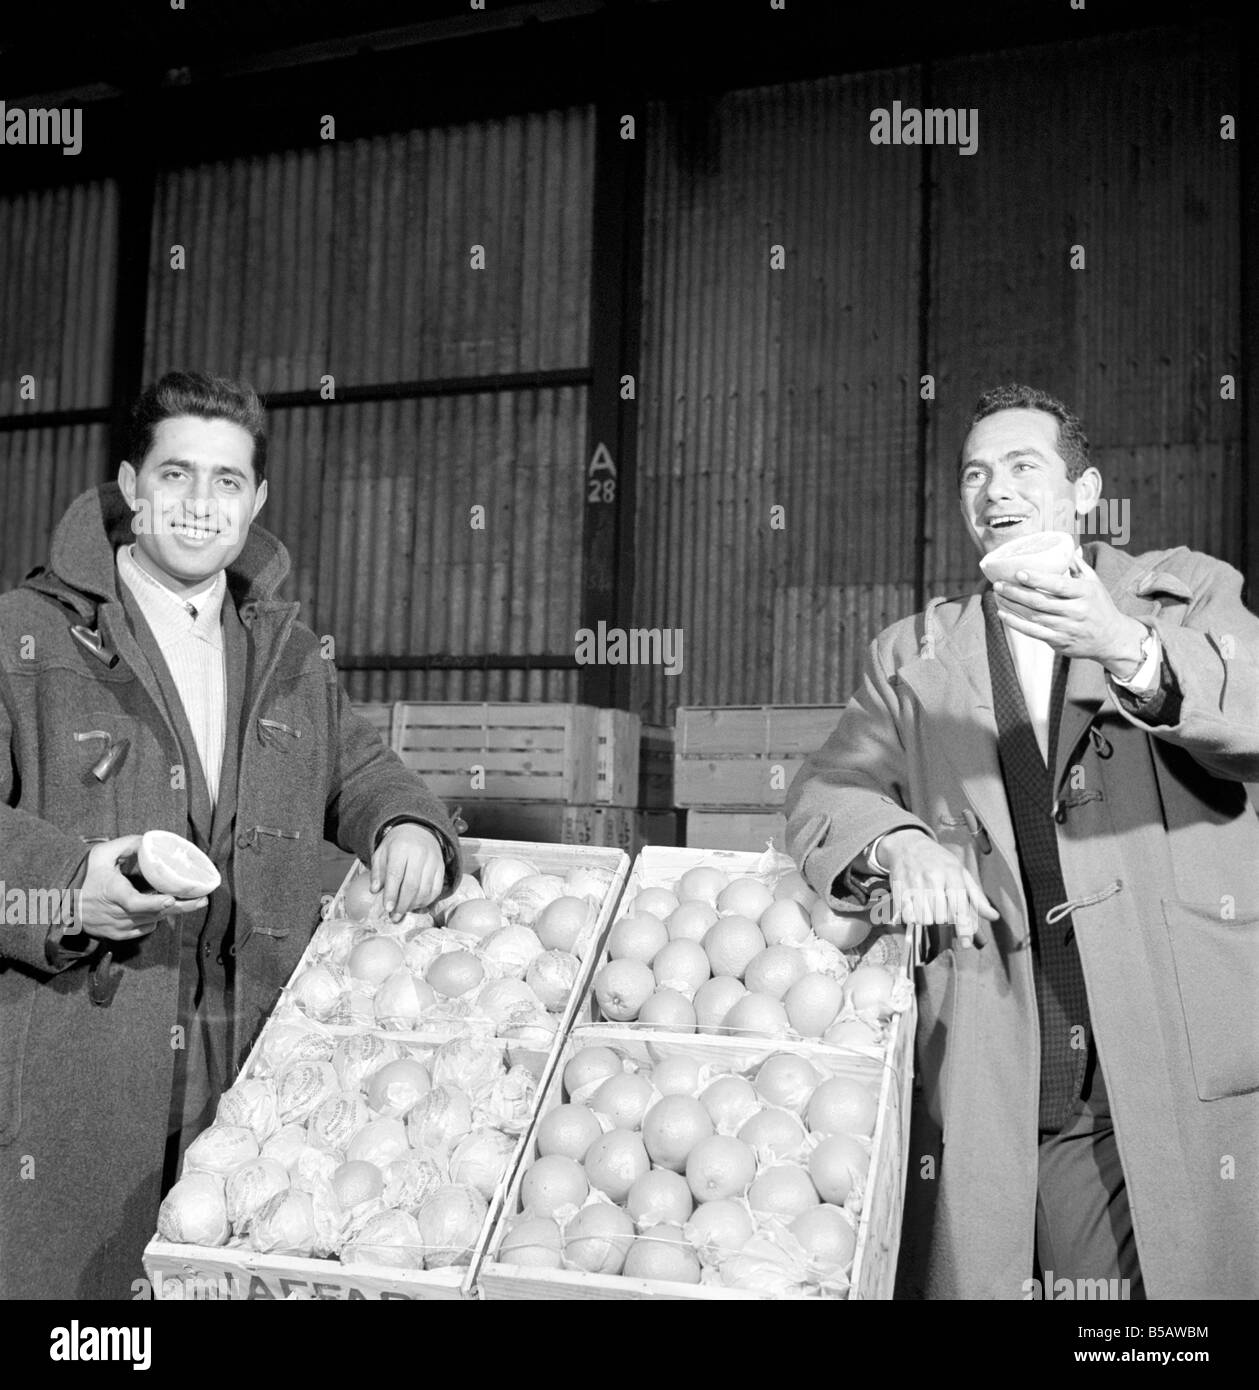 Food: Fruit: Oranges: Orange testers at Surrey Docks. March 1958 A658-016 Stock Photo